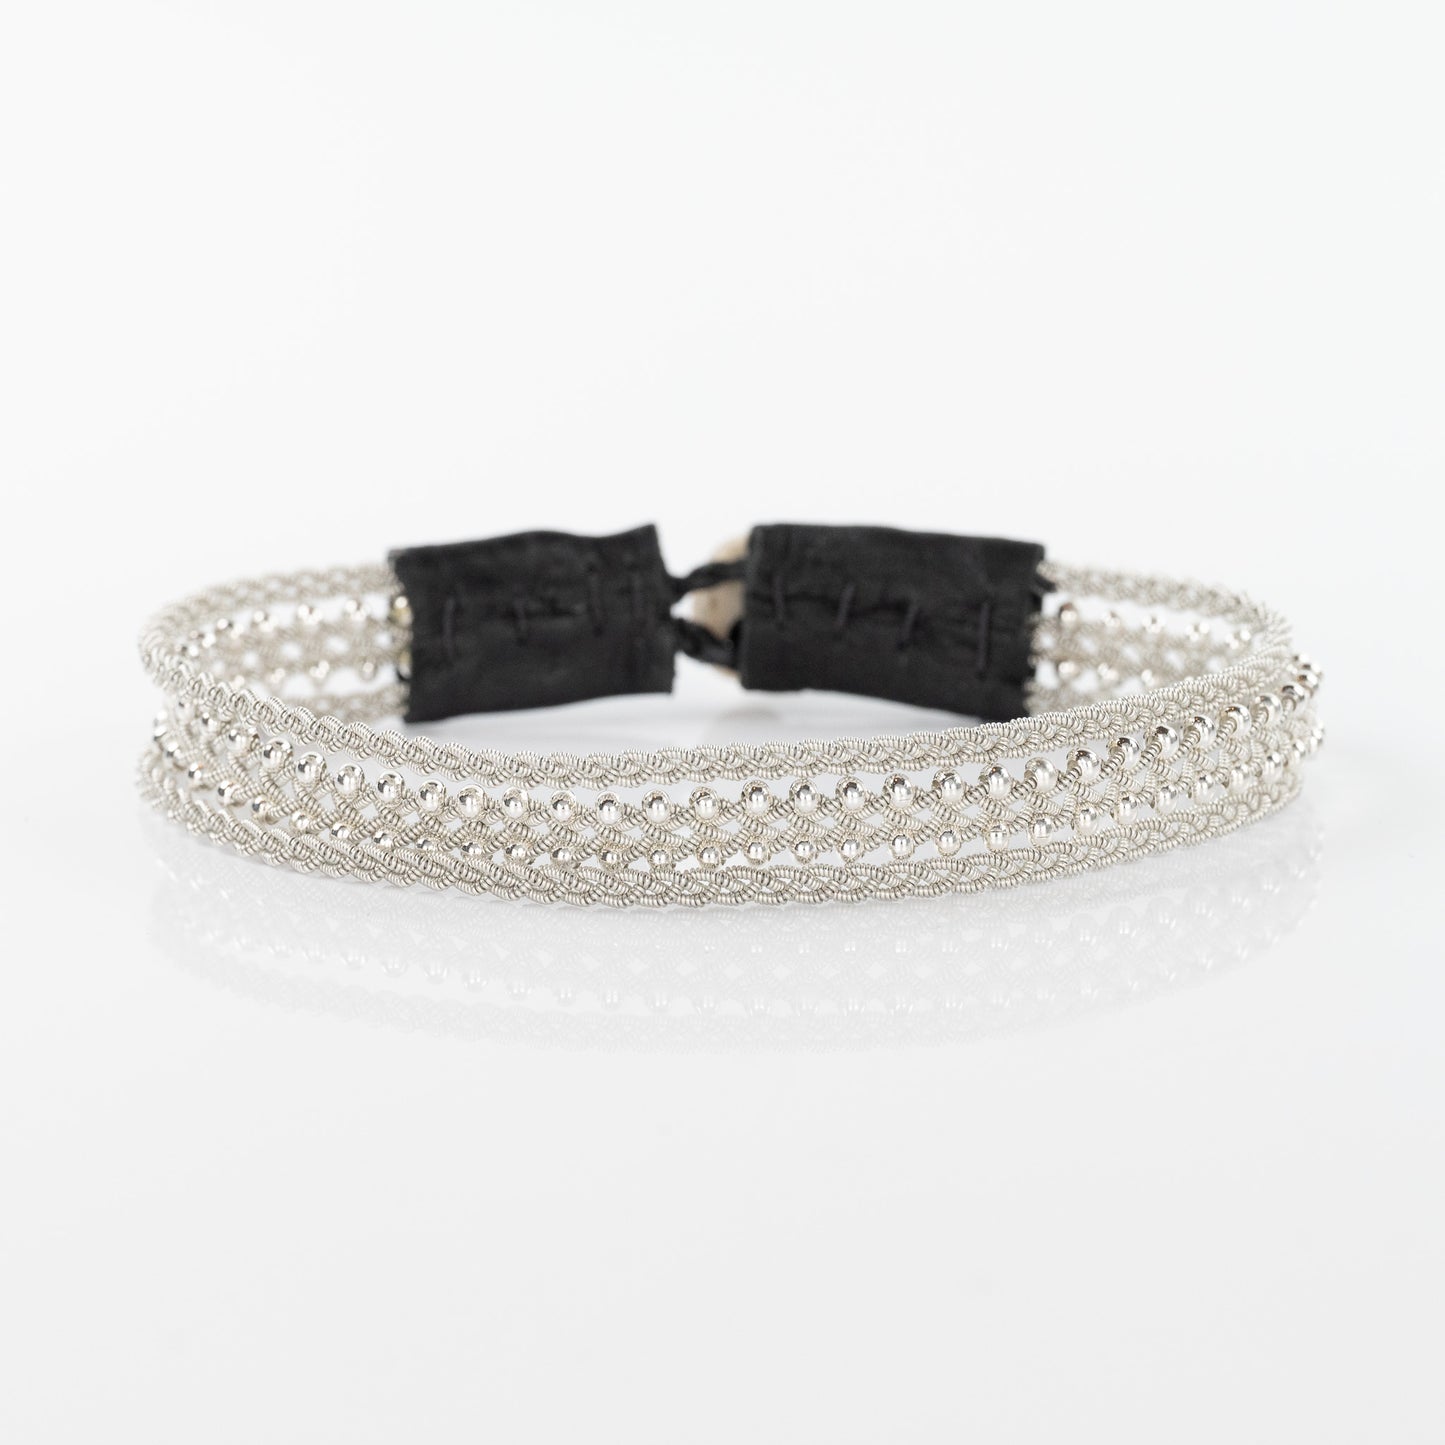 Lucia Silver Loose Strand Braid Bracelet with Black Closure